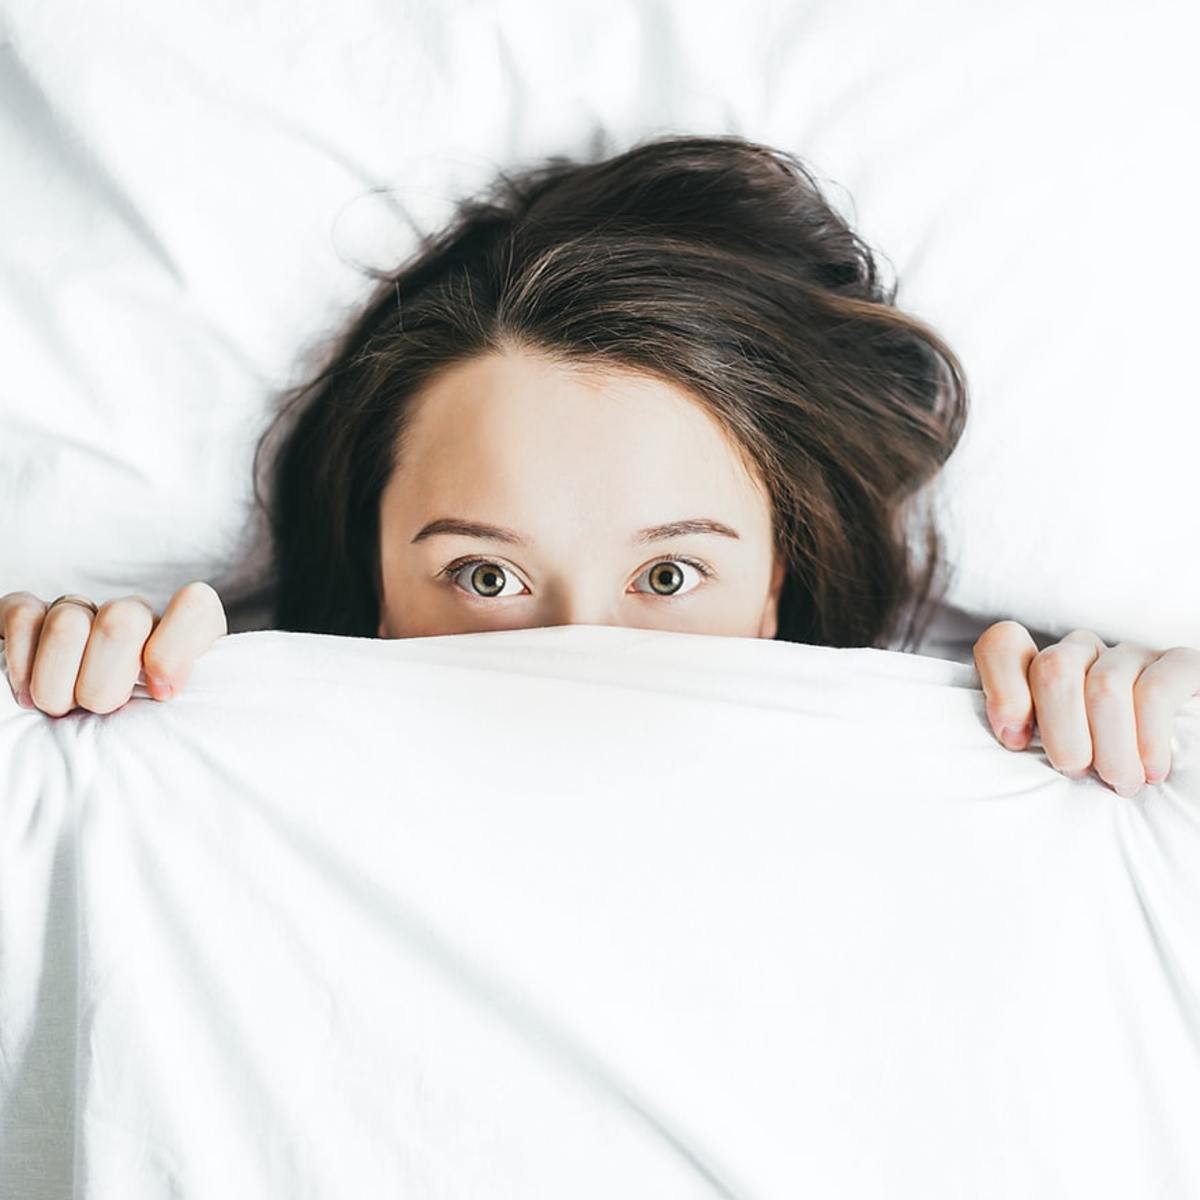 Is sleep paralysis normal?